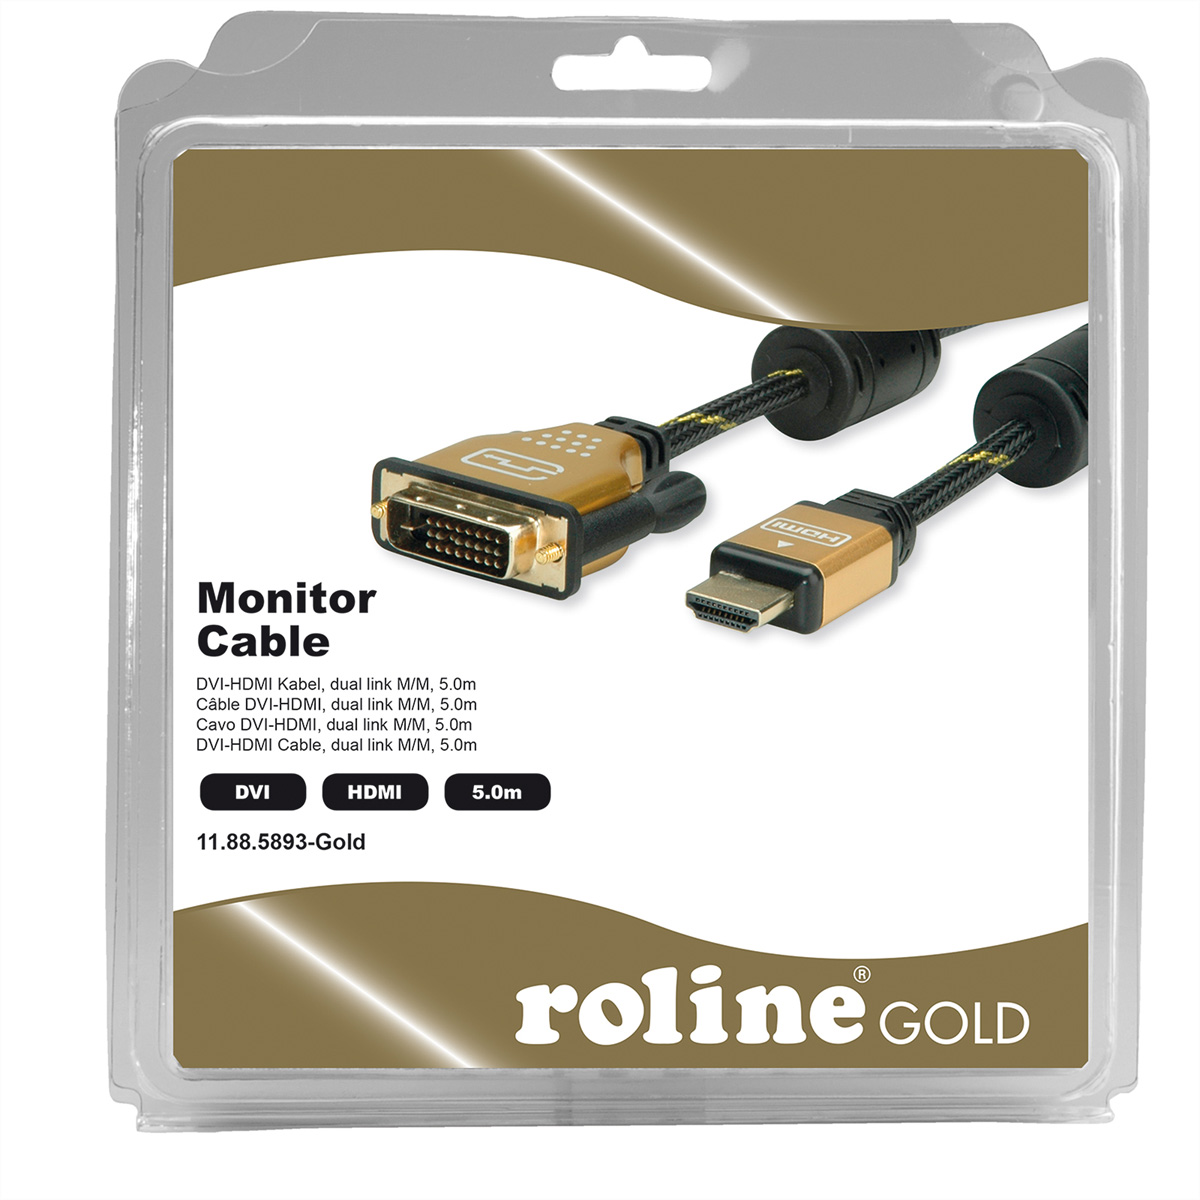 ROLINE Gold - Videokabel - Dual Link - HDMI / DVI - DVI-D (M) bis HDMI (M) - 5 m - Doppelisolierung